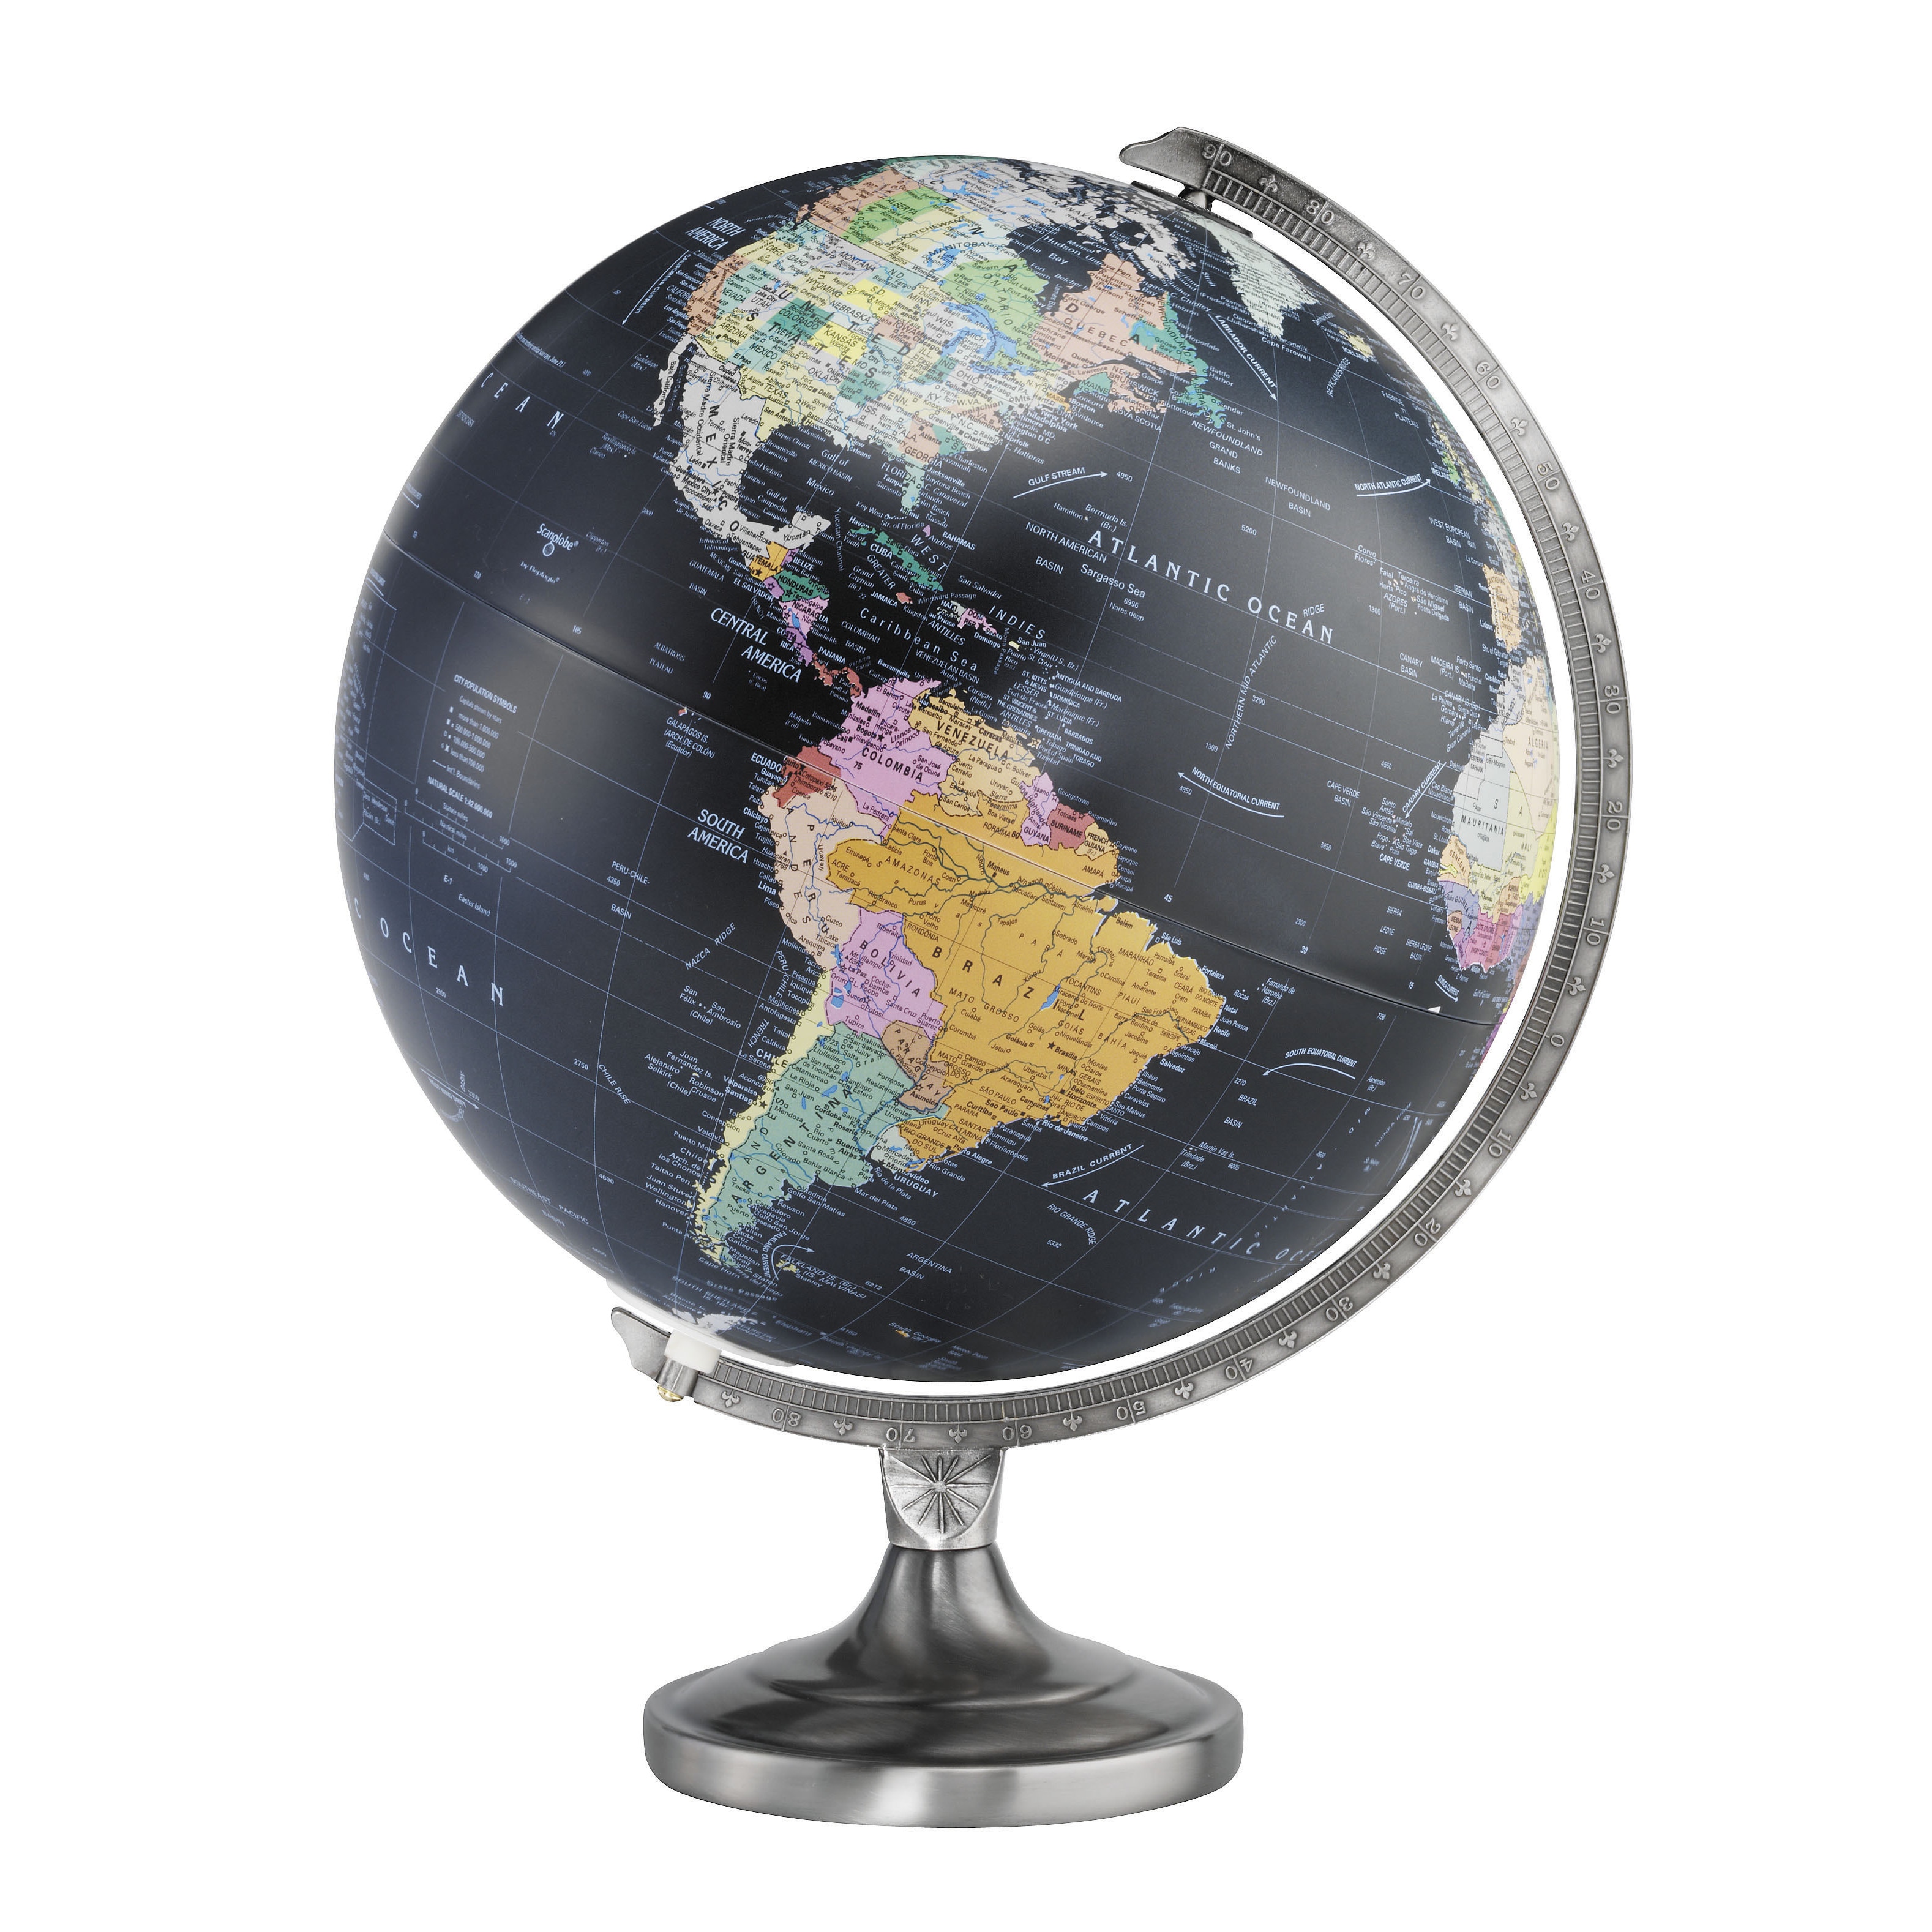 Herff Jones Orion Illuminated Desktop World Globe - image 2 of 3